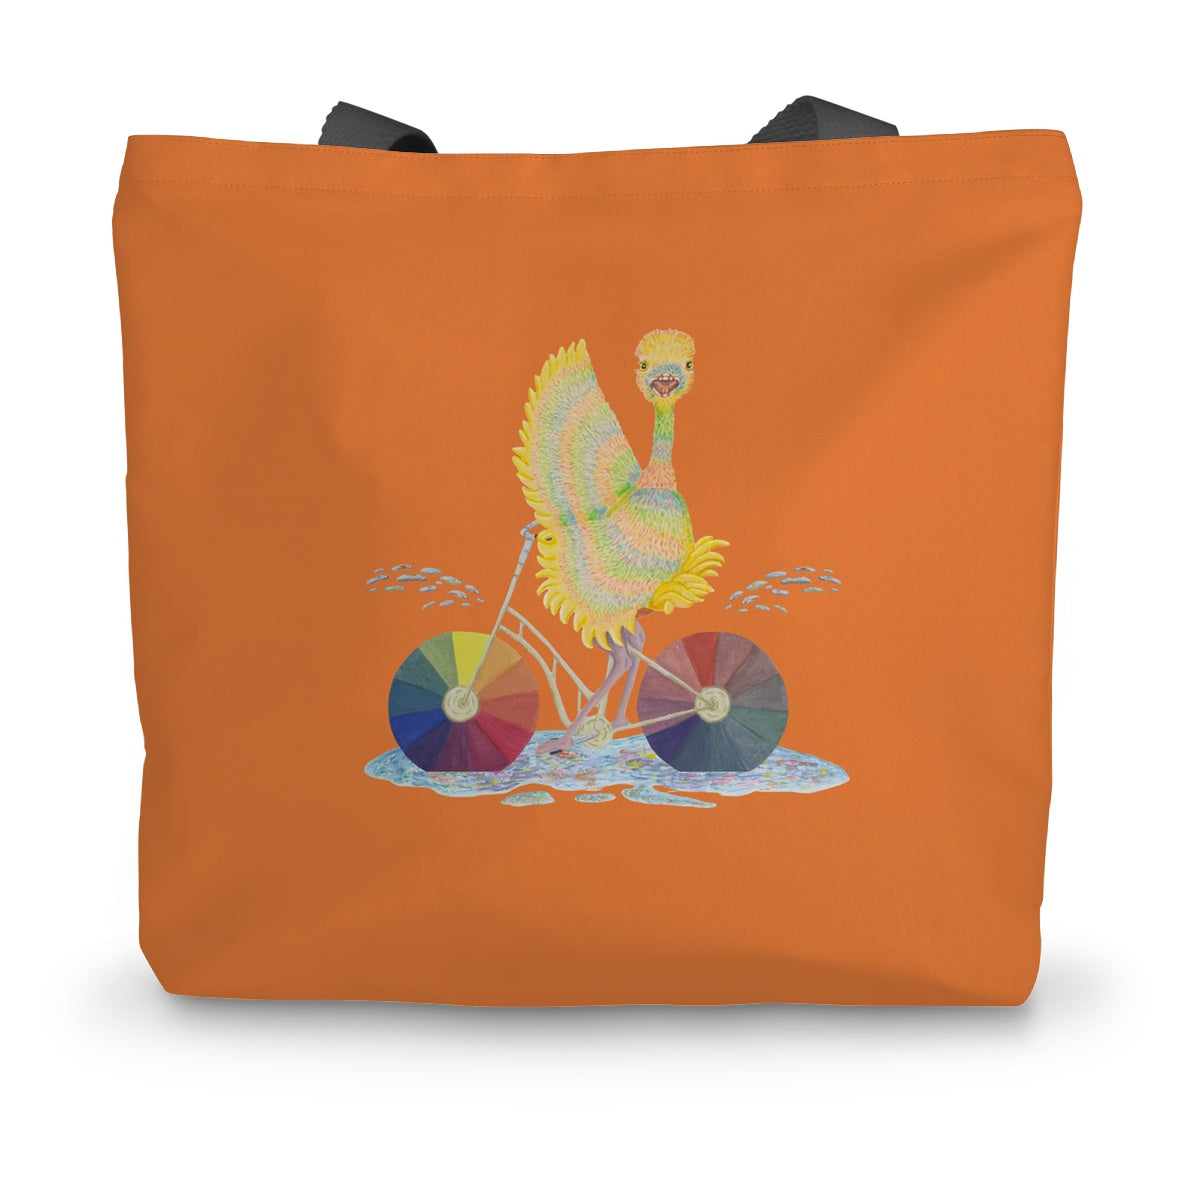 Ophelia Ostrich Orange Canvas Tote Bag